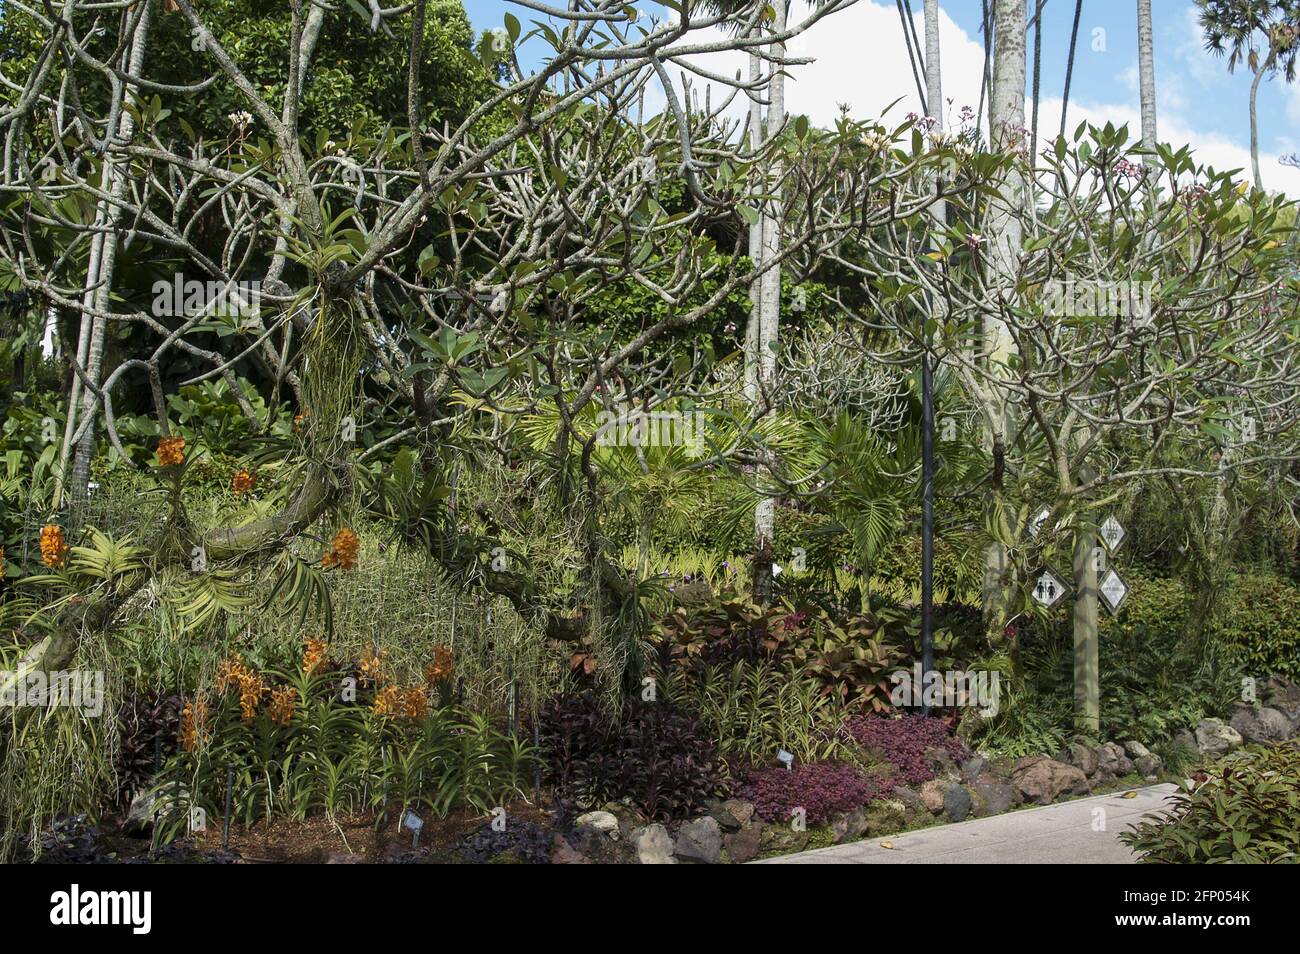 Singapore, Singapur, Asia, Asia, Asia; Giardino Botanico; Un vicolo nel giardino botanico circondato da piante esotiche; Eine Gasse im Botanischen Garten Foto Stock